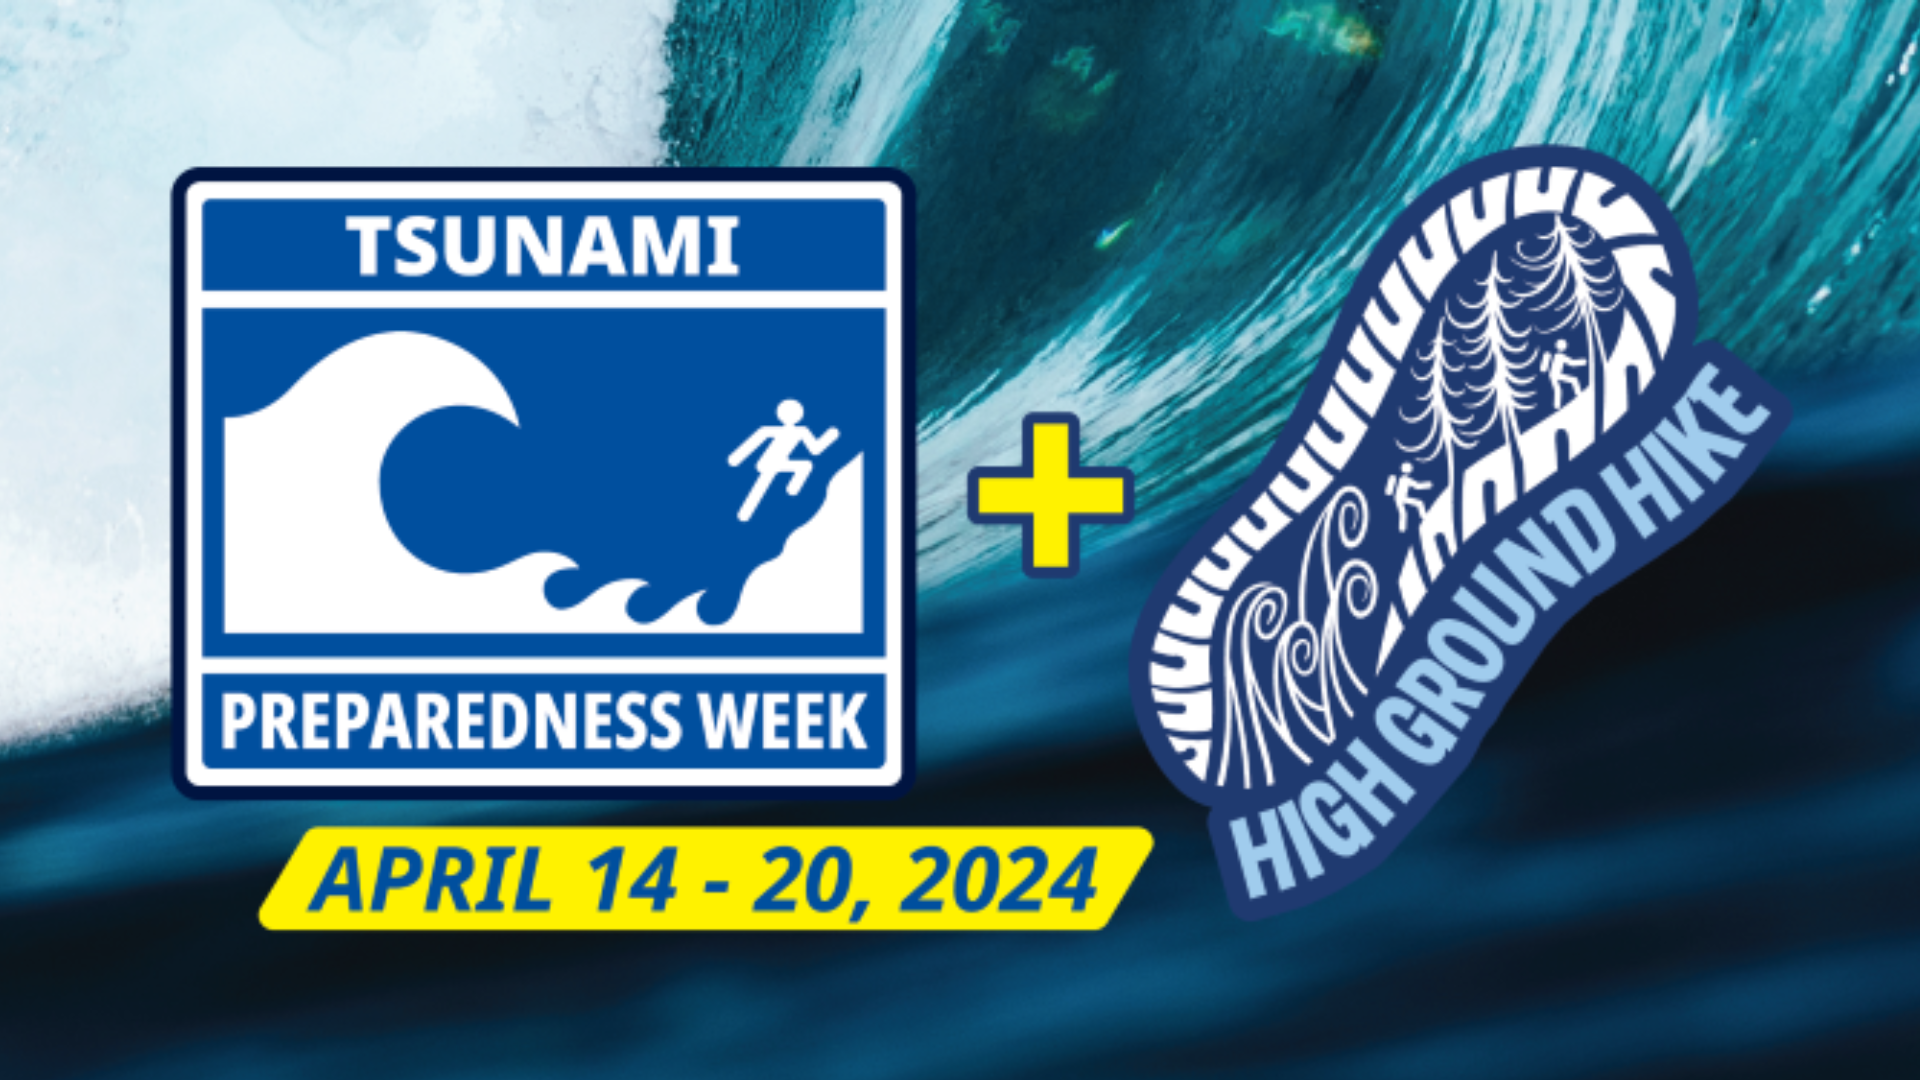 Tsunami Preparedness Week - BC Earthquake Alliance